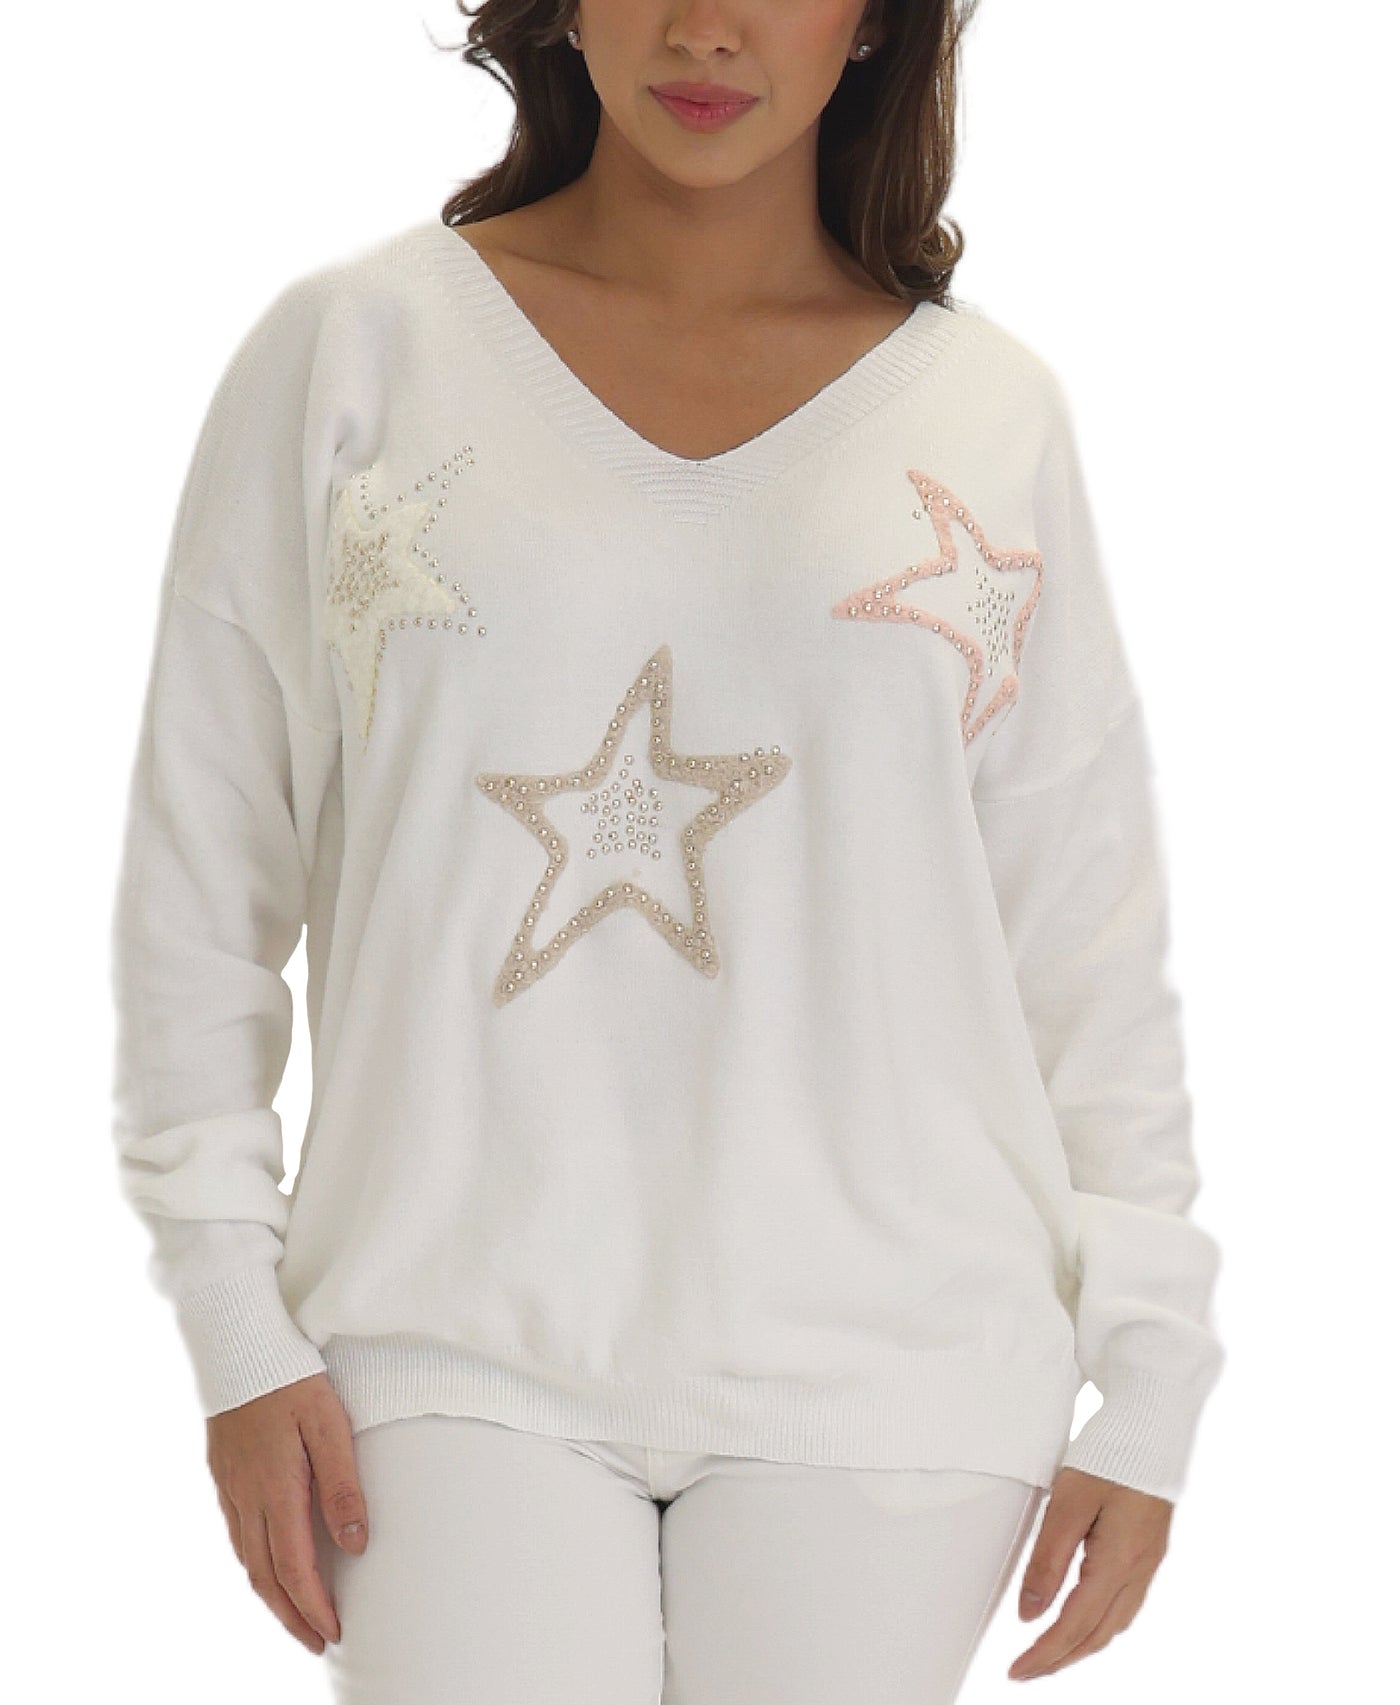 Sweater w/ Stars image 1